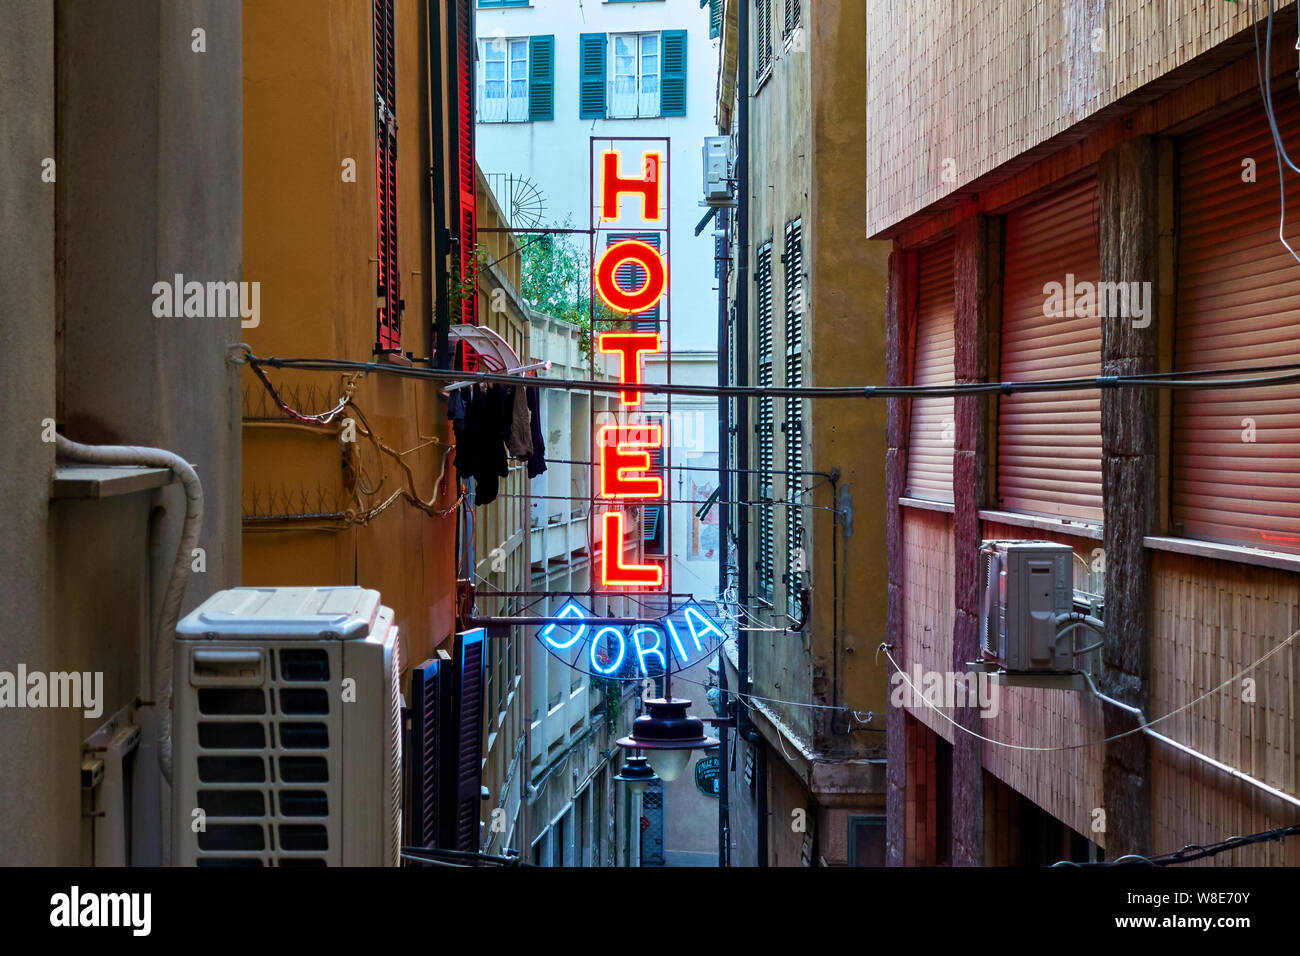 Genoa (Genova), Italy - June 30, 2019: Red neon hotel sign on the wall in the narrow street in Genoa Stock Photo